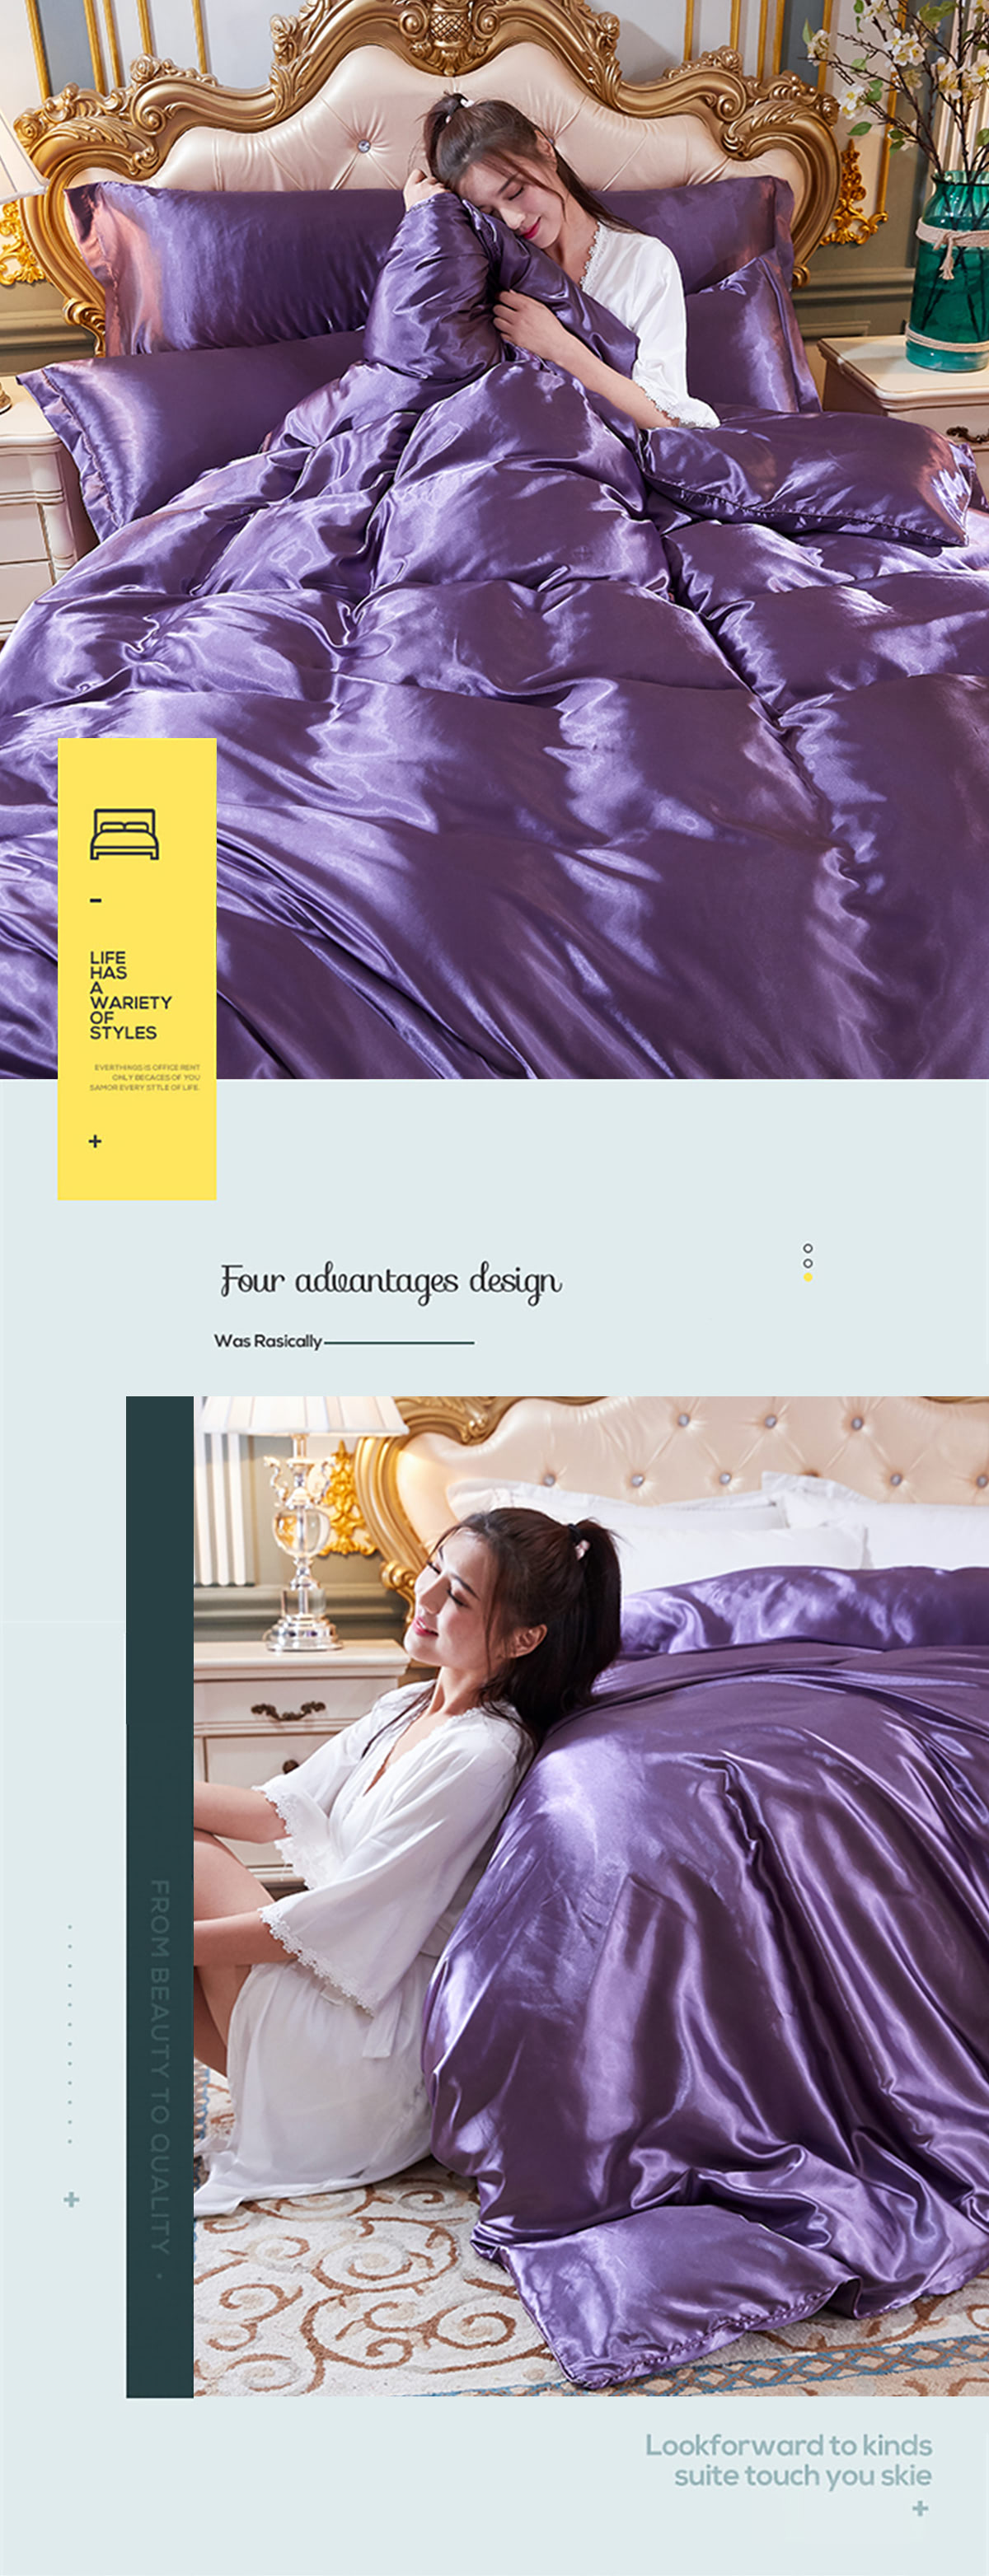 Silky-Satin-Bedding-Set-with-Duvet-Cover-Flat-Sheet-Pillowcases12.jpg